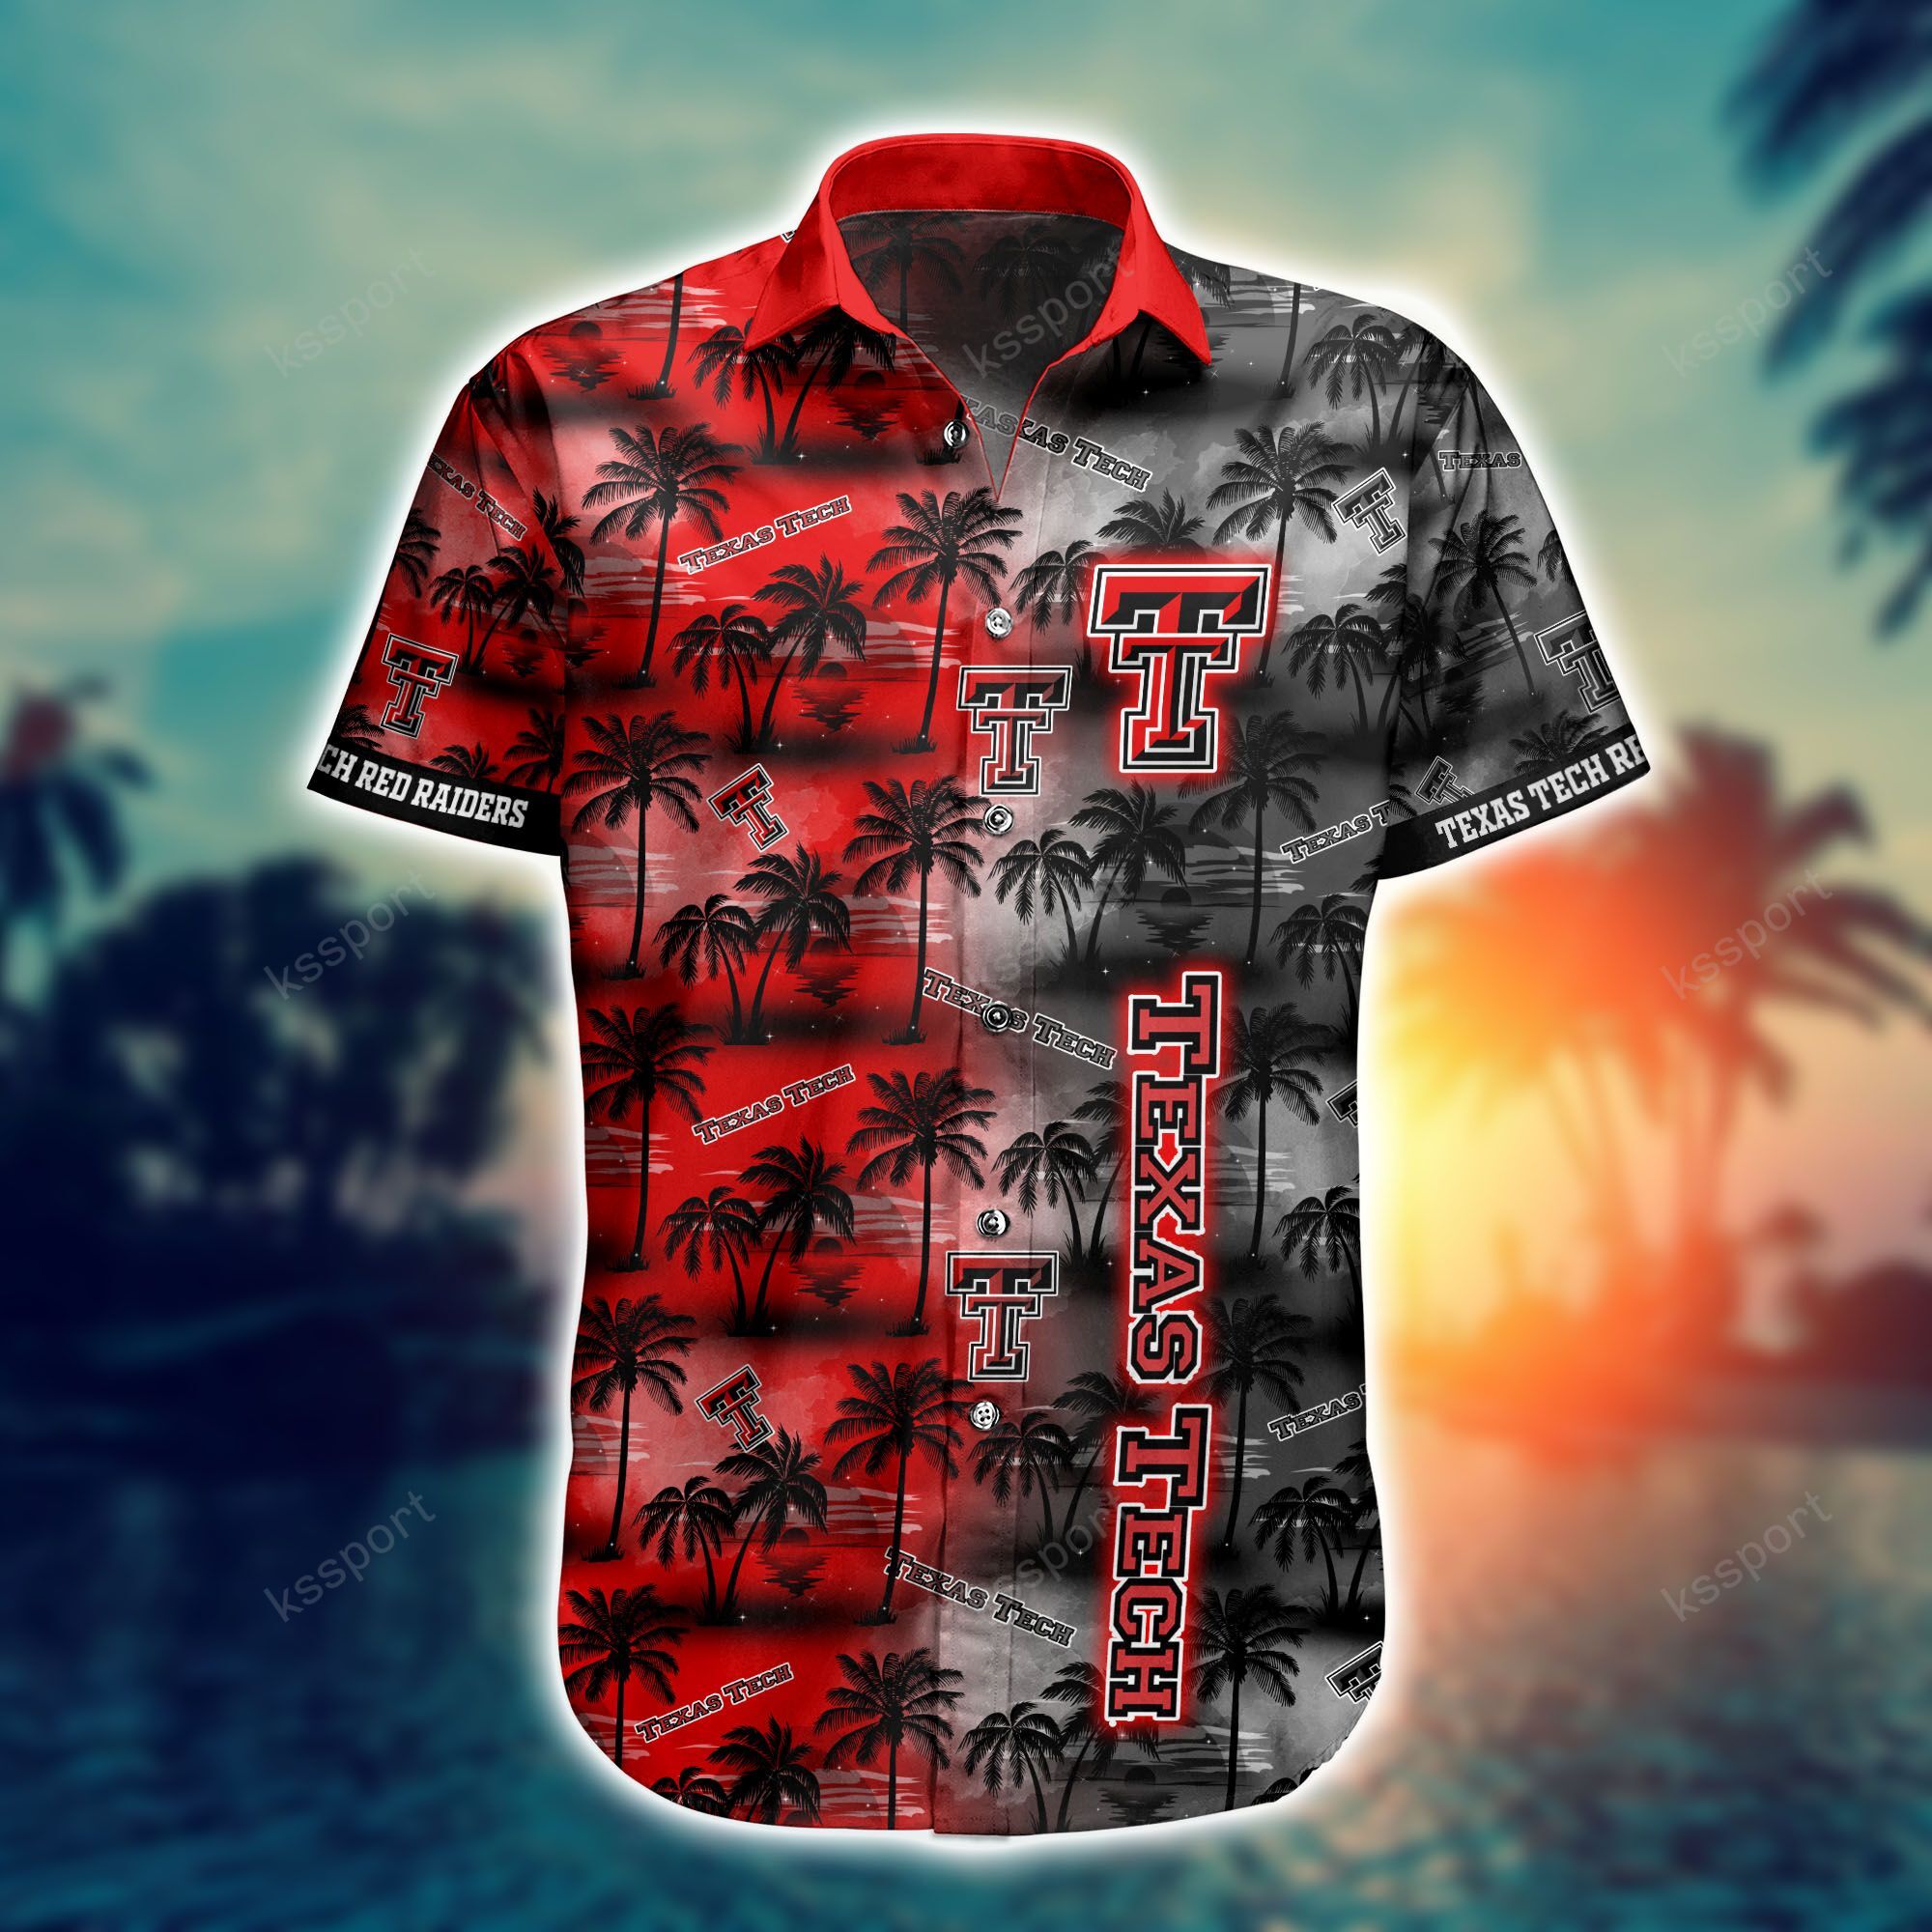 Hawaiian shirt and shorts is a great way to look stylish at a beach party 104